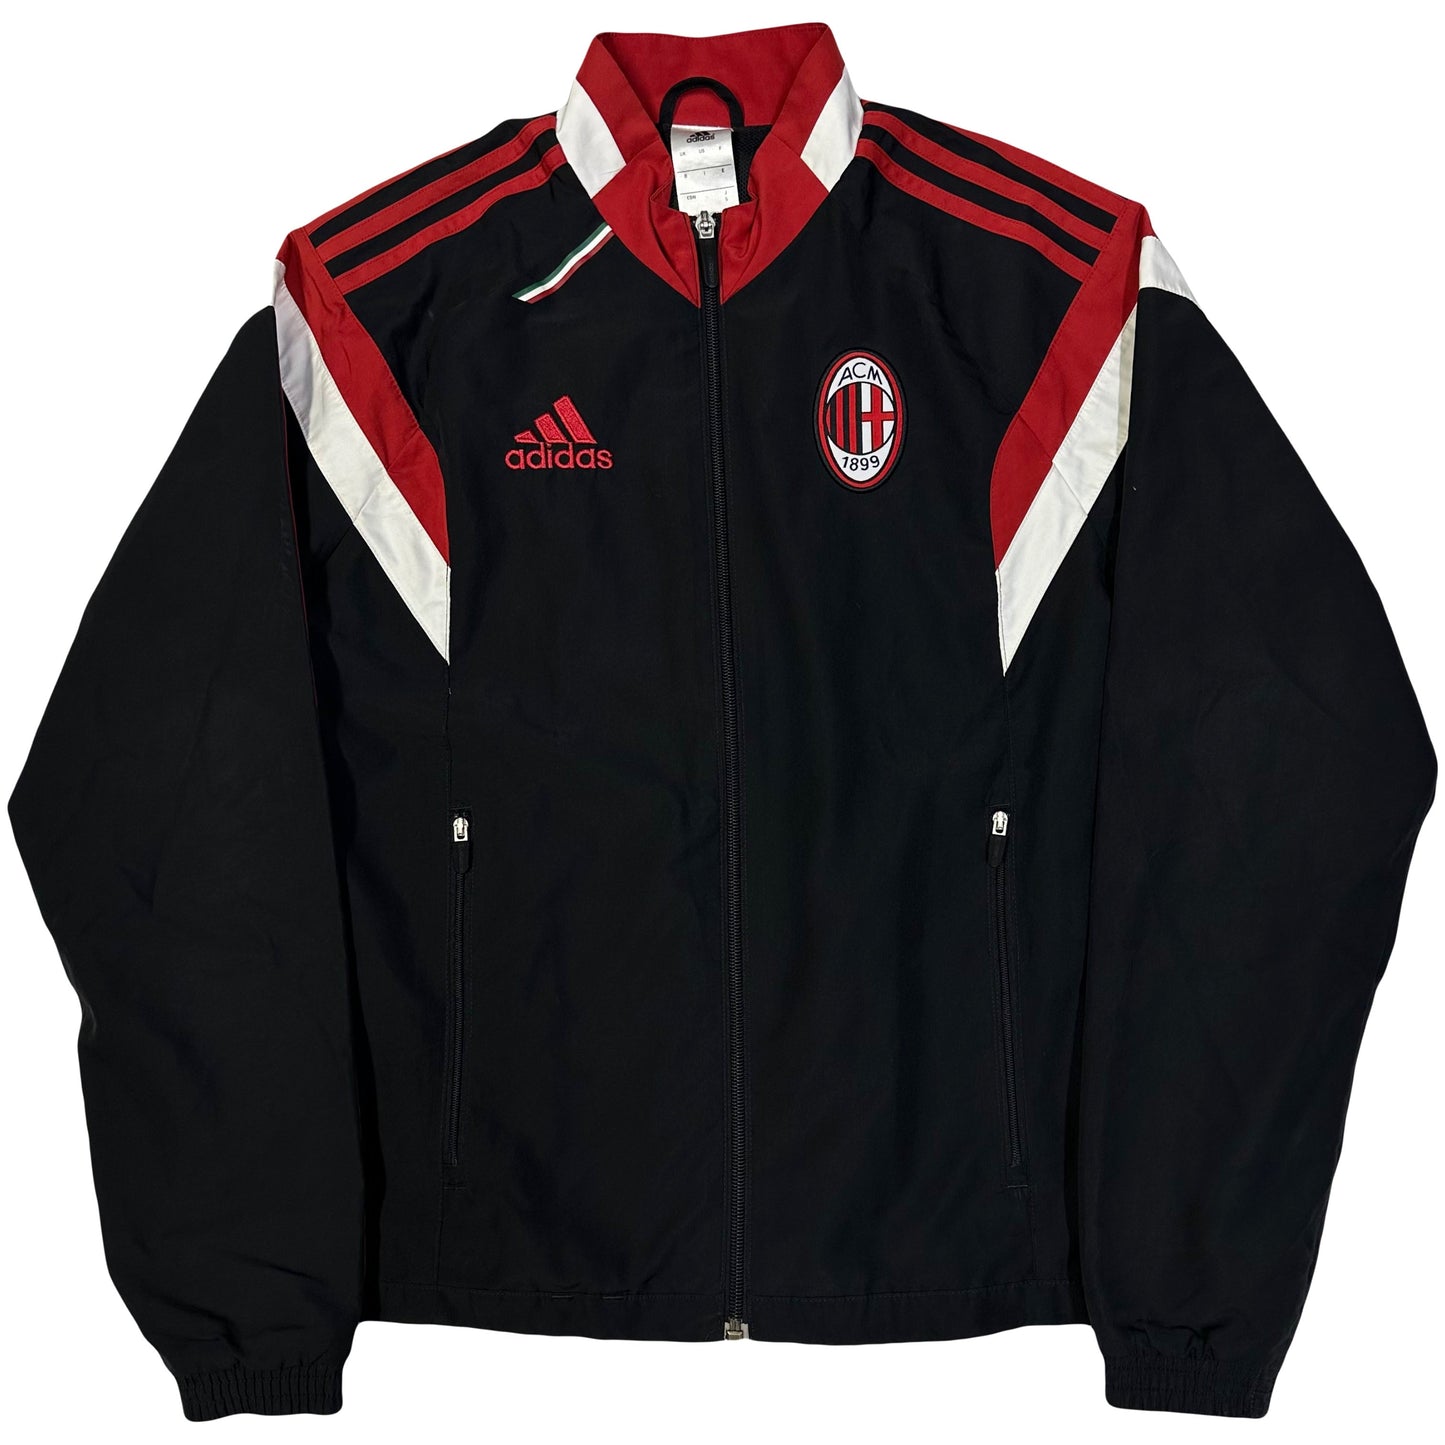 Adidas AC Milan 2014/15 Tracksuit ( S )